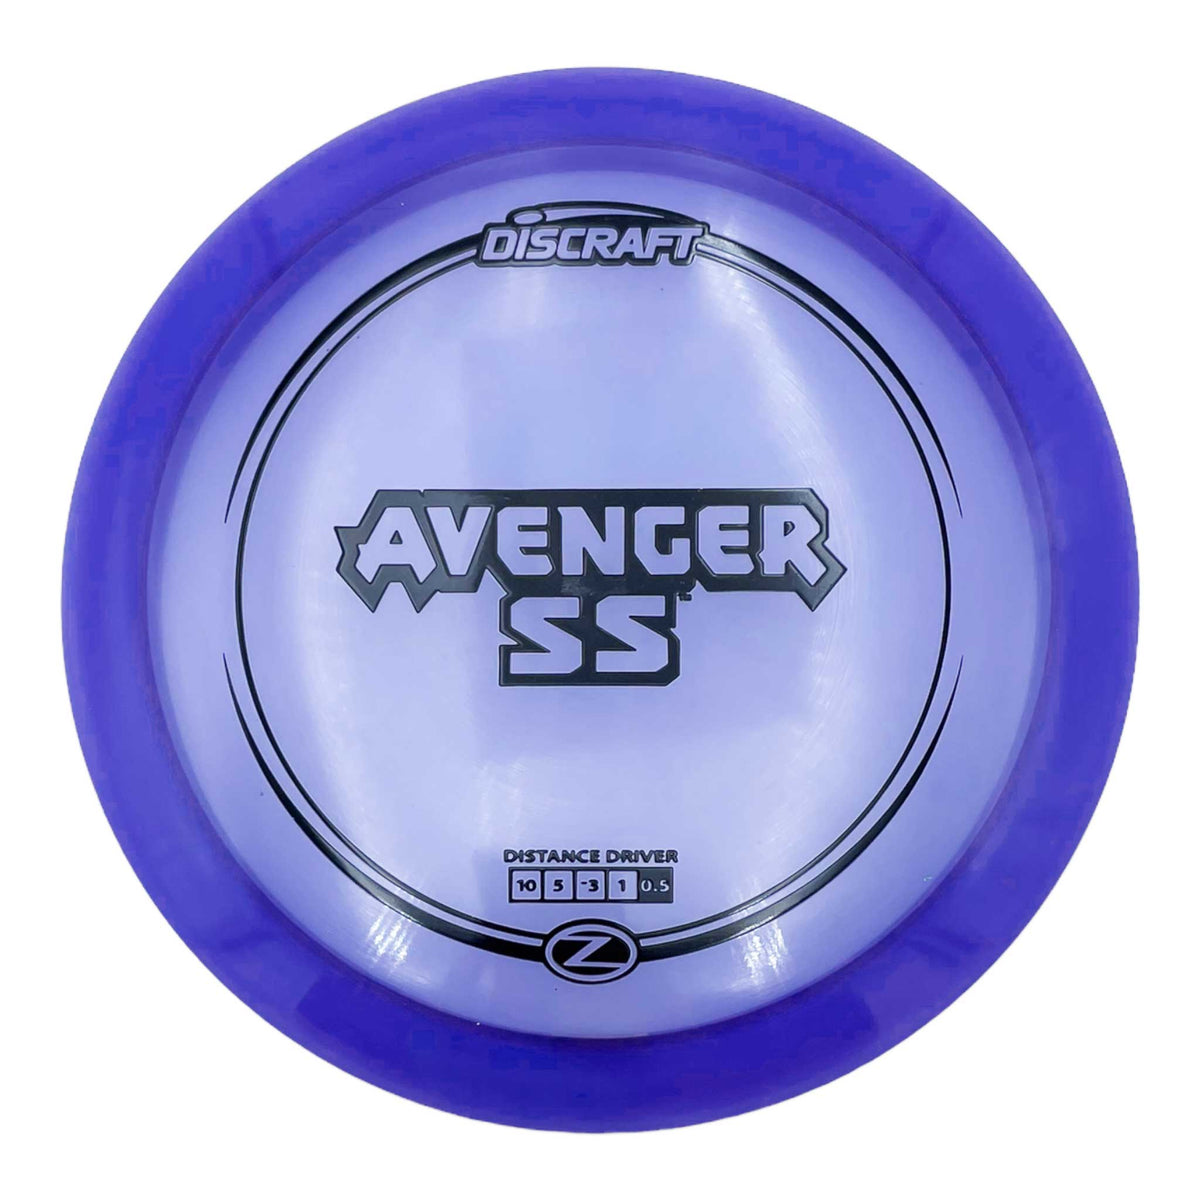 Discraft Z Line Avenger SS Distance Driver - Purple / Black